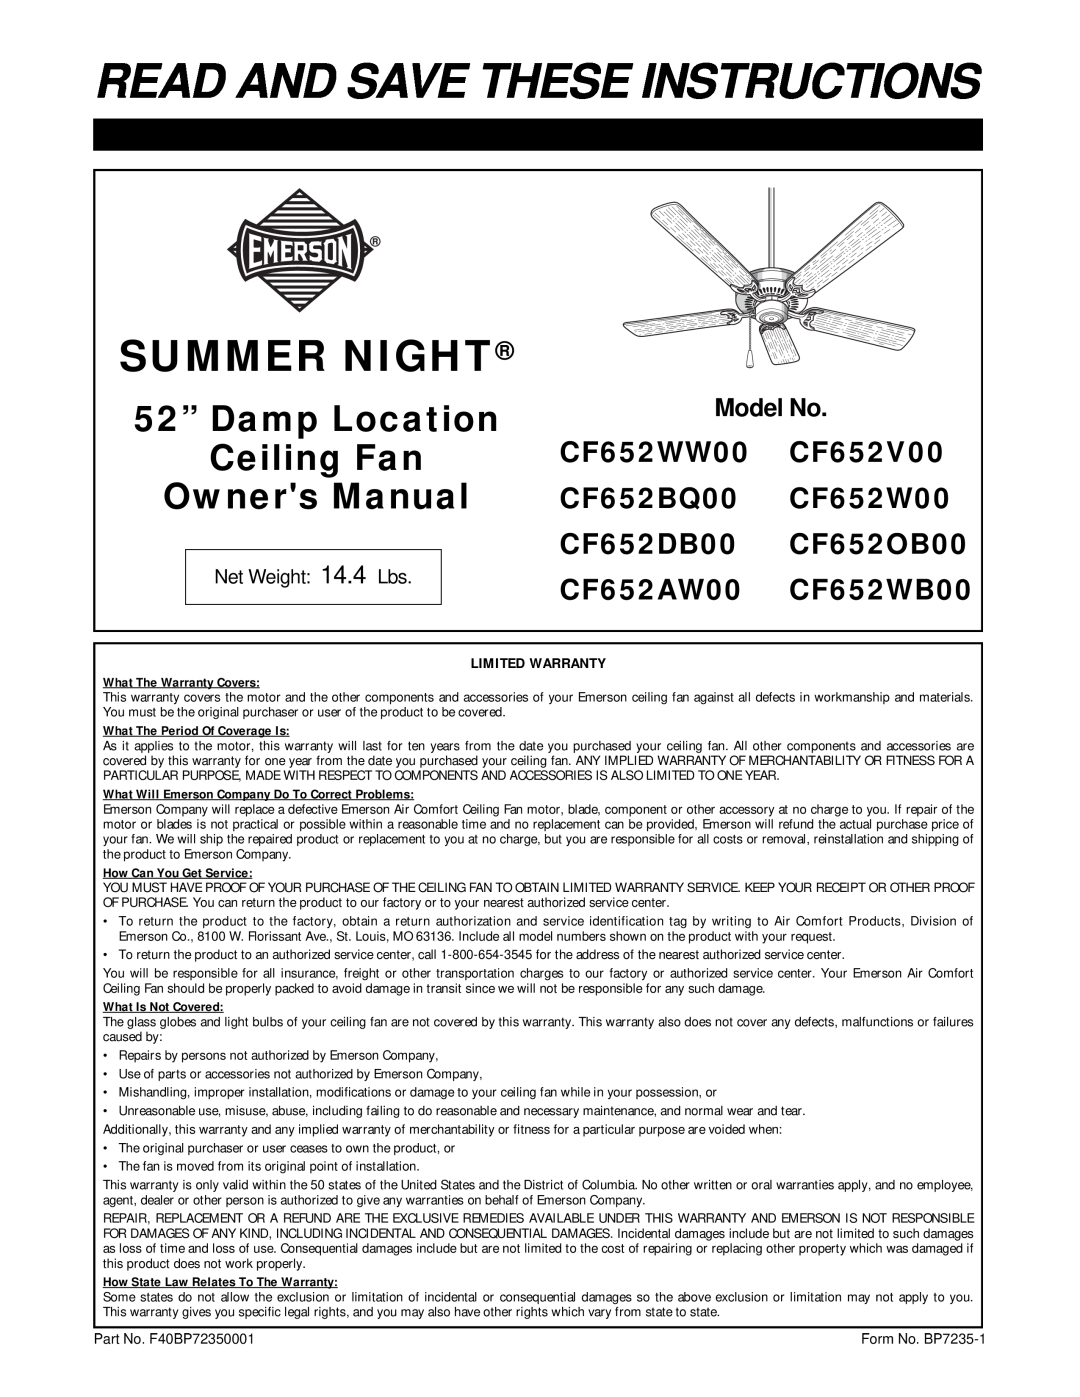 Emerson warranty Read And Save These Instructions, Summer Night, CF652WW00 CF652V00 CF652BQ00 CF652W00, Model No 